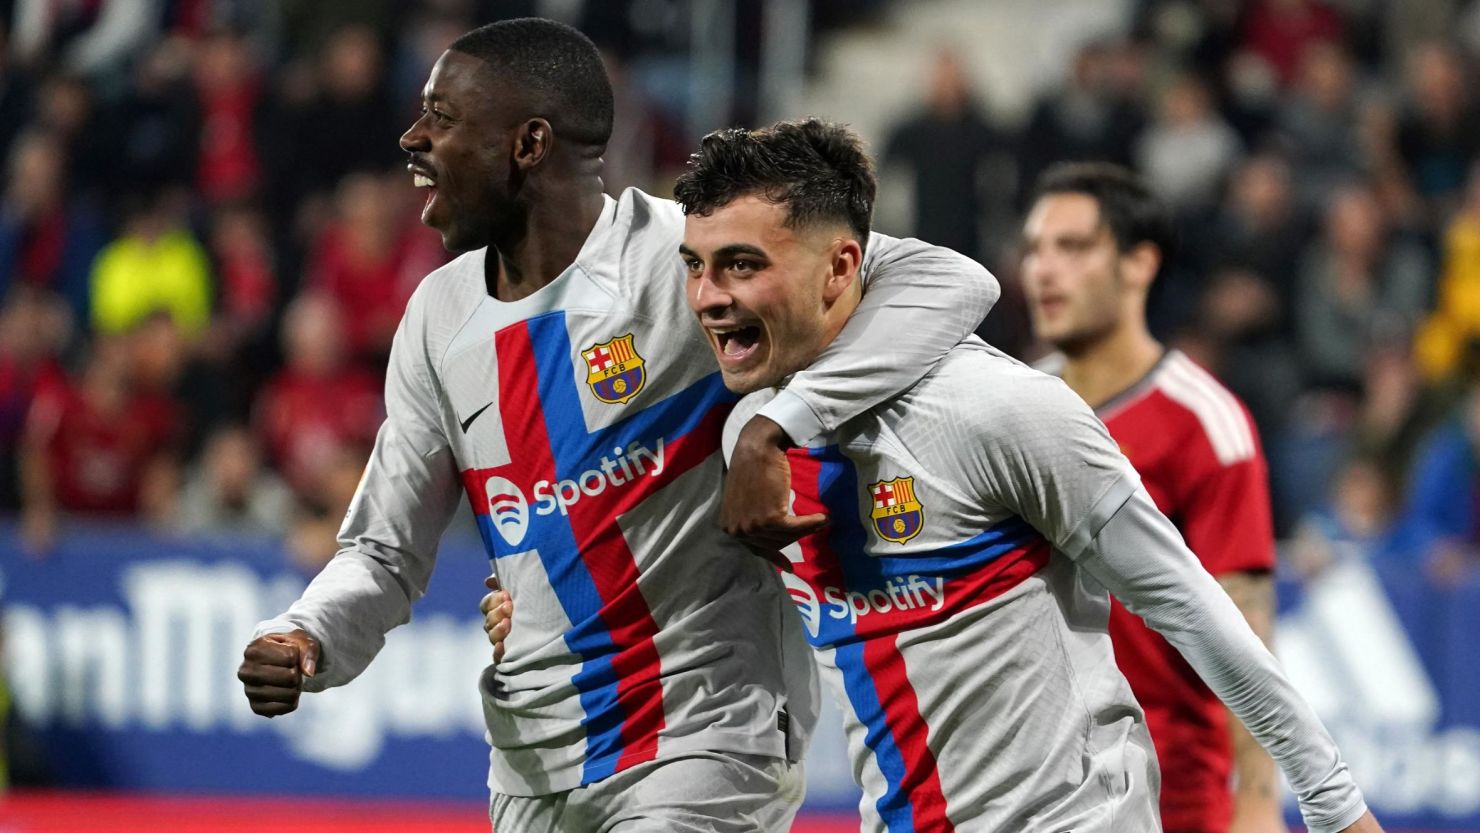 Pedri celebrates Barça's first goal against Osasuna with Ousmane Dembélé.